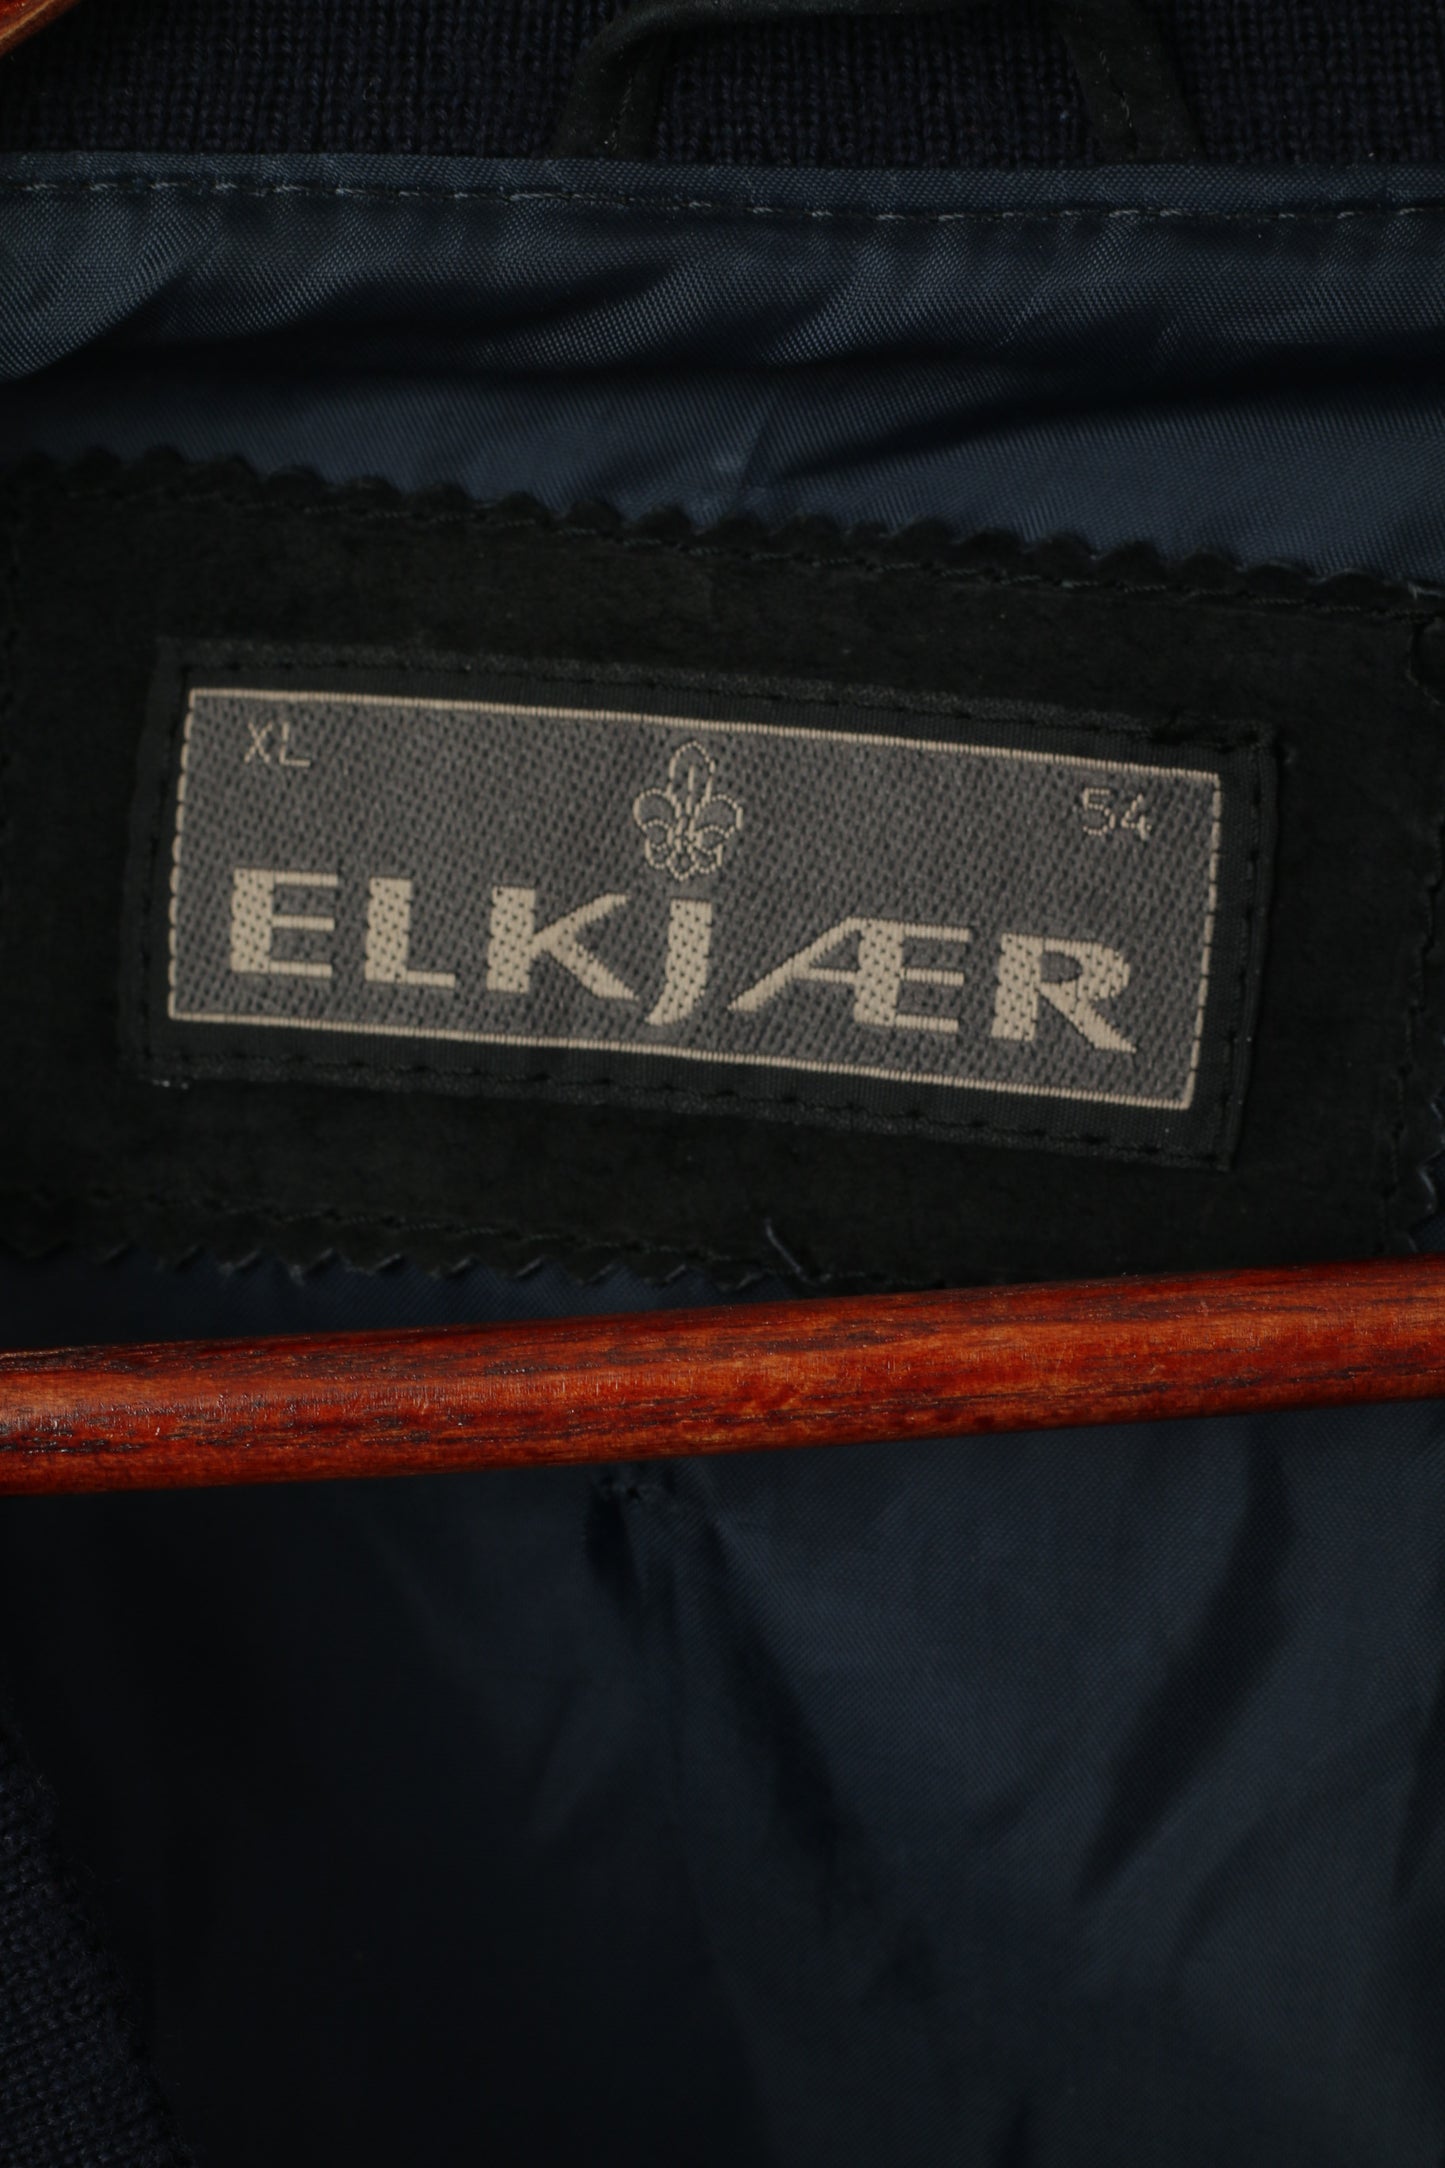 Elkjaer Men 54 XL Button Front Cardigan Navy Leather Wool Blend Vintage Sweater